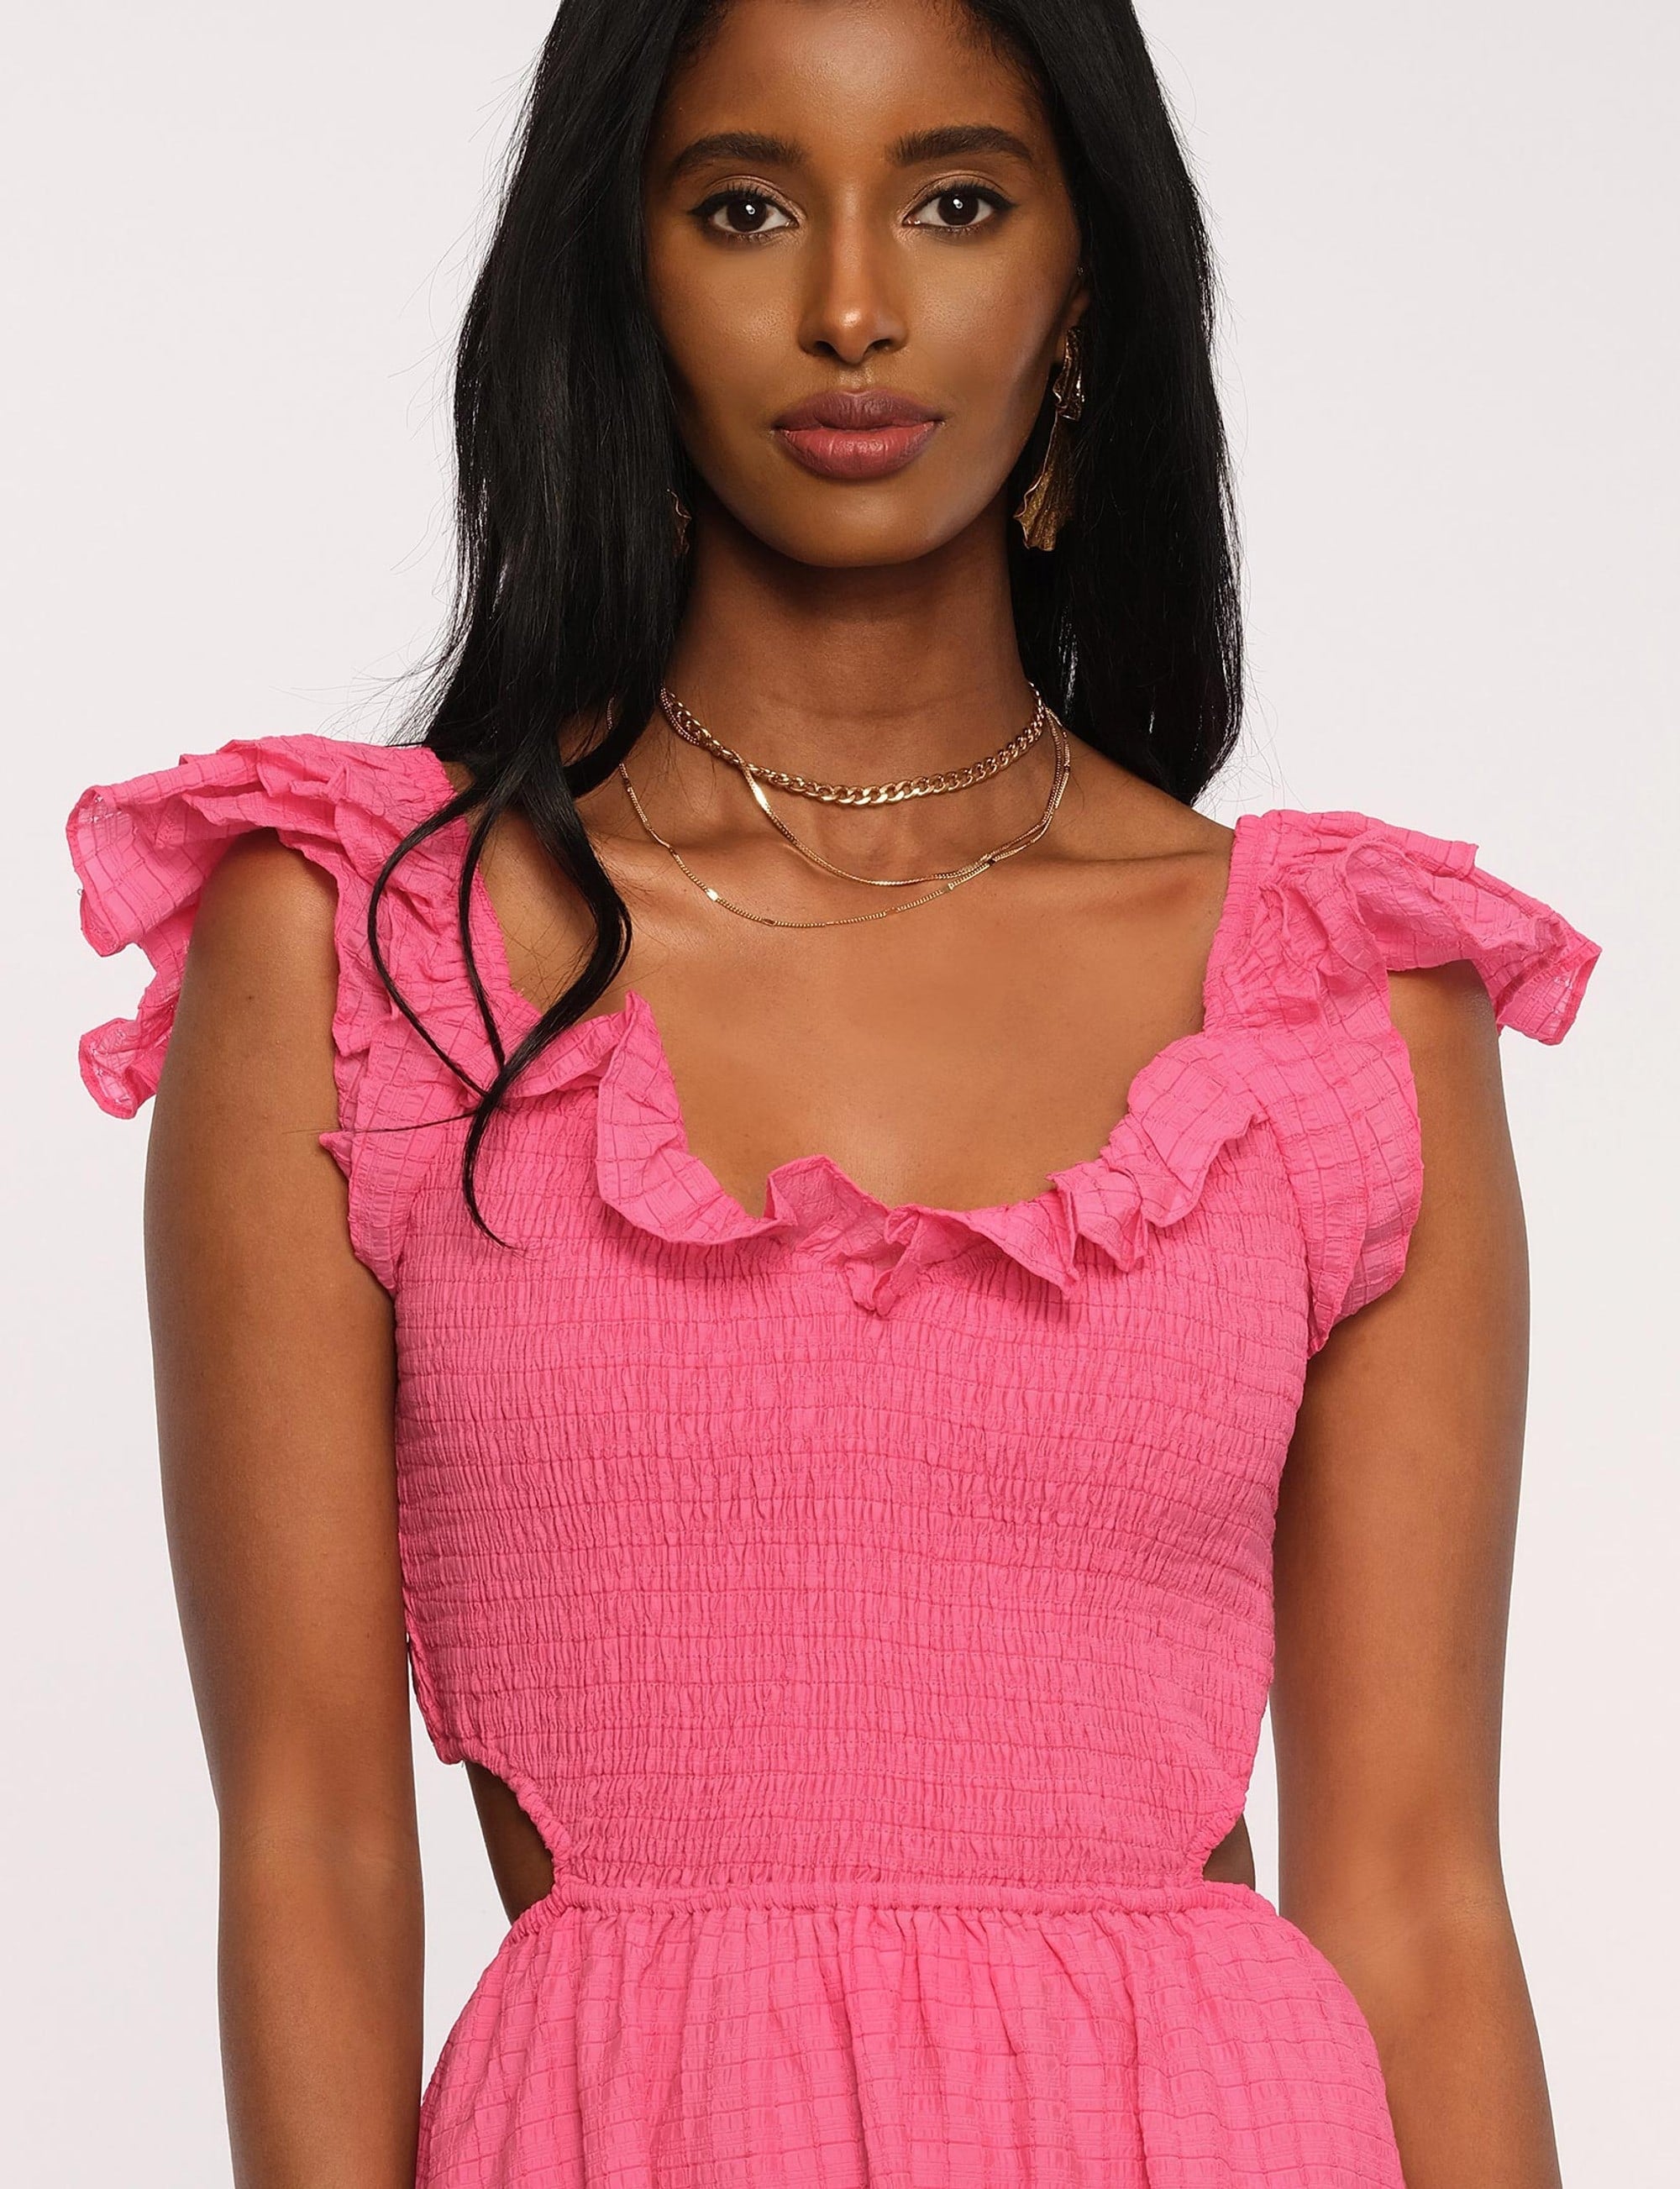 Heartloom Juny Dress in Hot Pink - clever alice